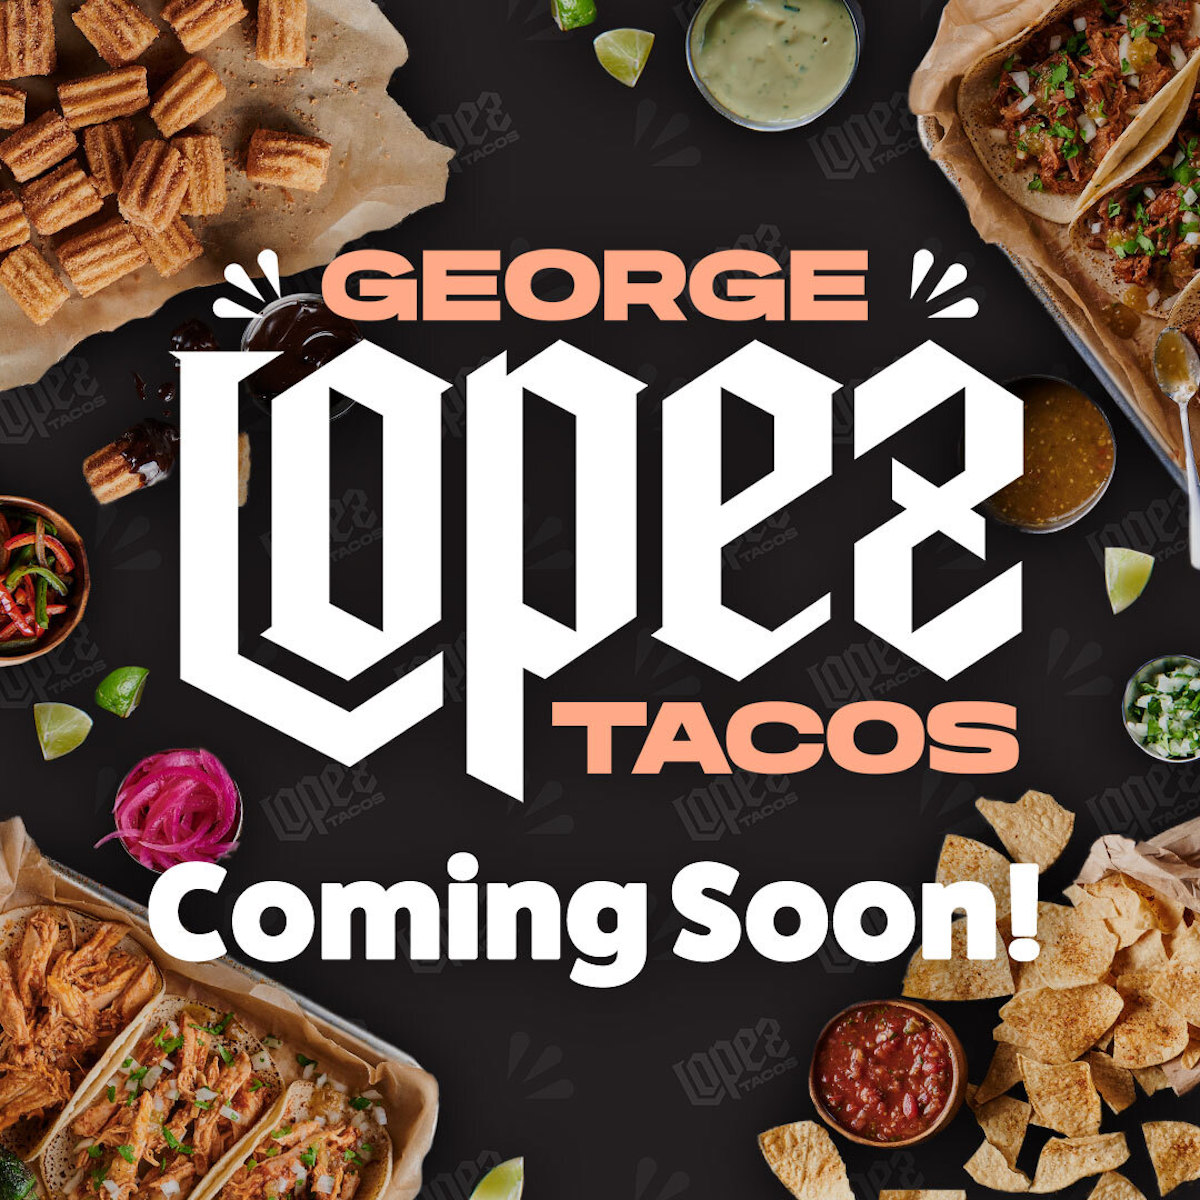 San Diego to Participate in Virtual Taco Restaurant